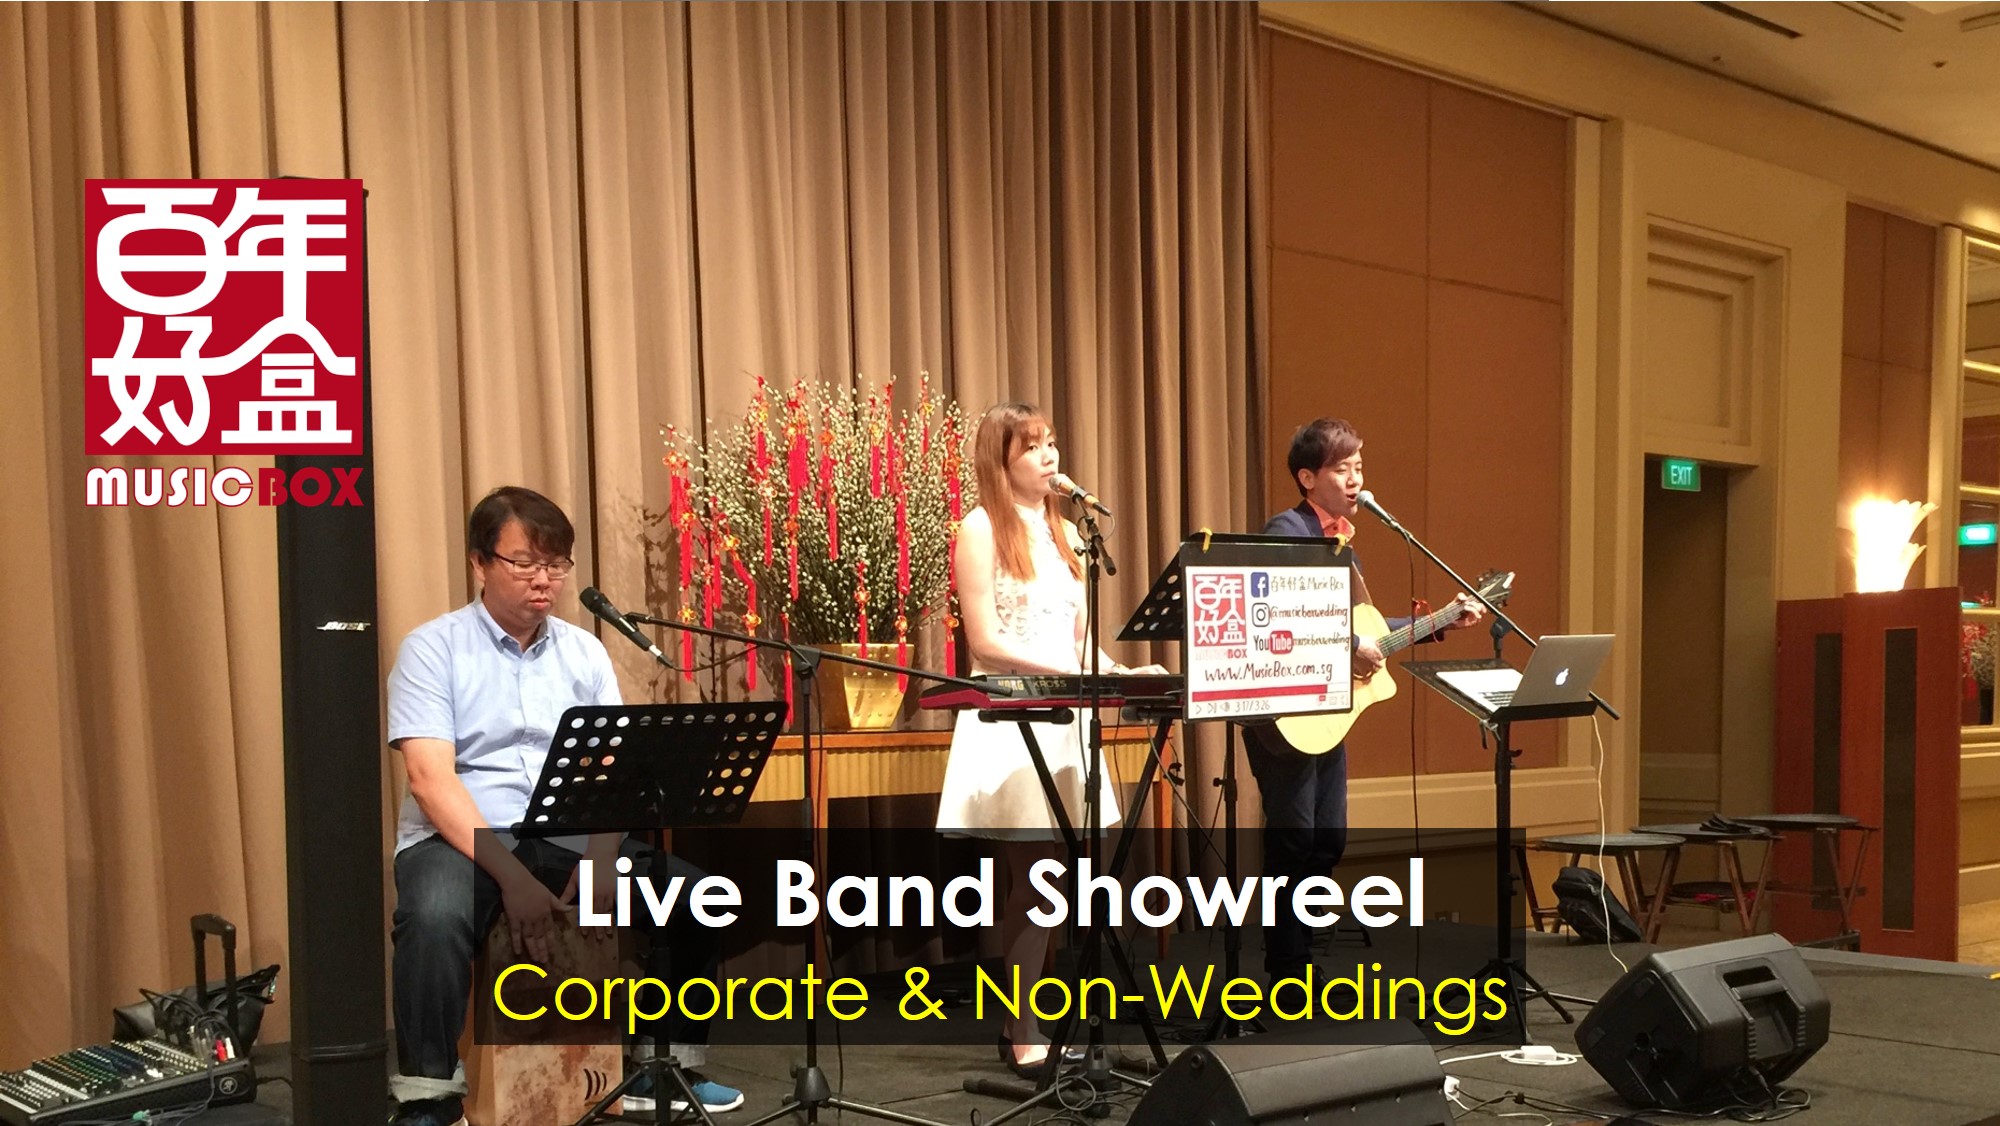 Music Box Corporate & Non-Wedding Showreel